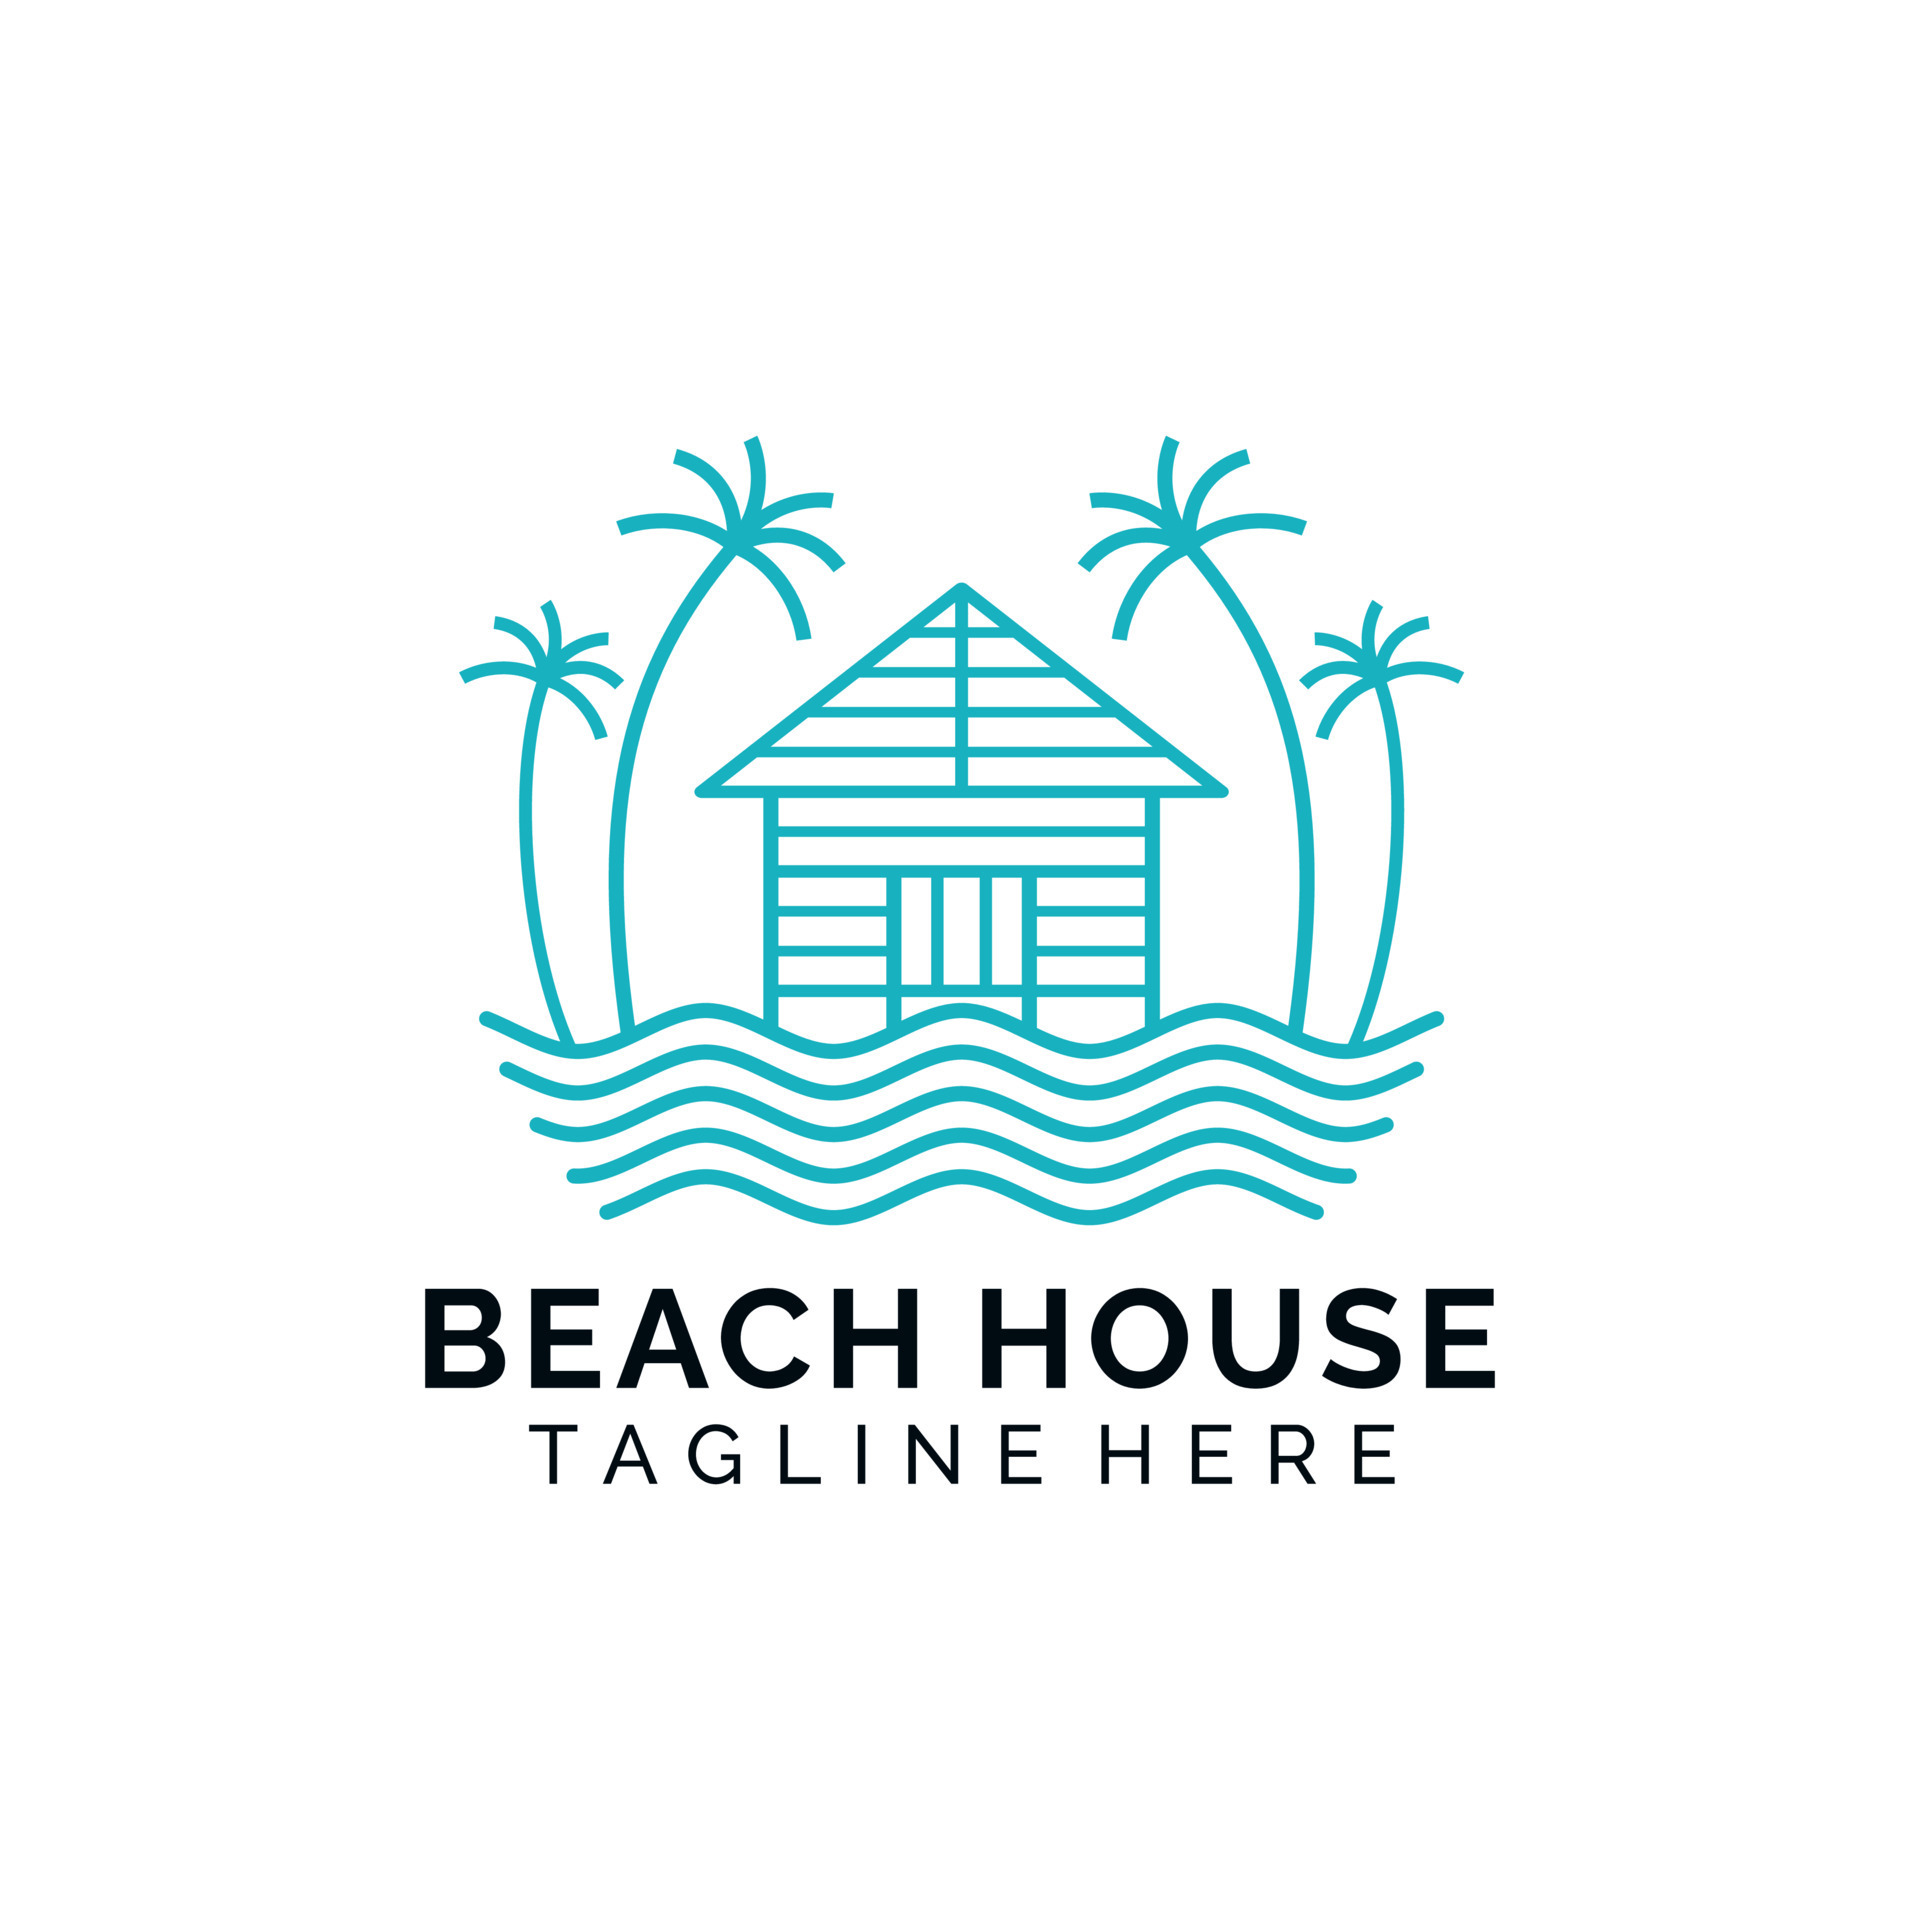 https://static.vecteezy.com/system/resources/previews/007/955/424/original/beach-house-minimalist-simple-line-logo-design-free-vector.jpg